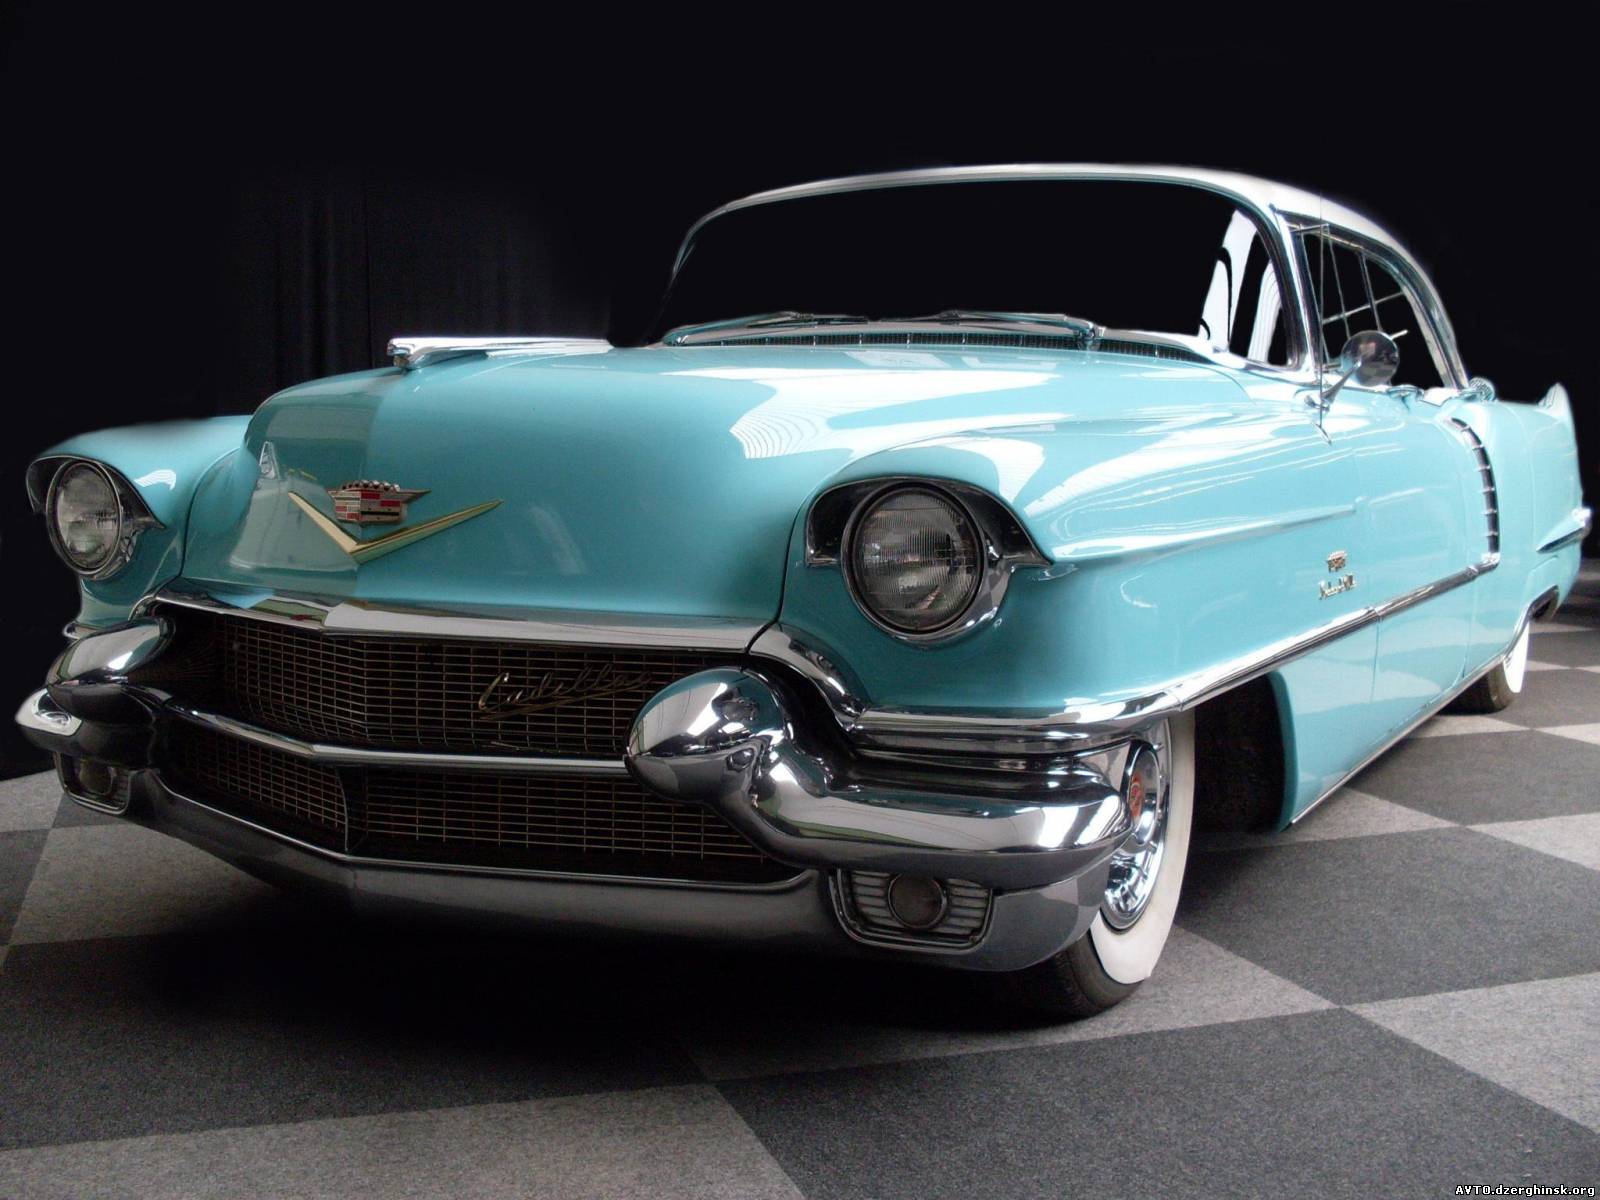 071. Cadillac Sedan deVille 1956